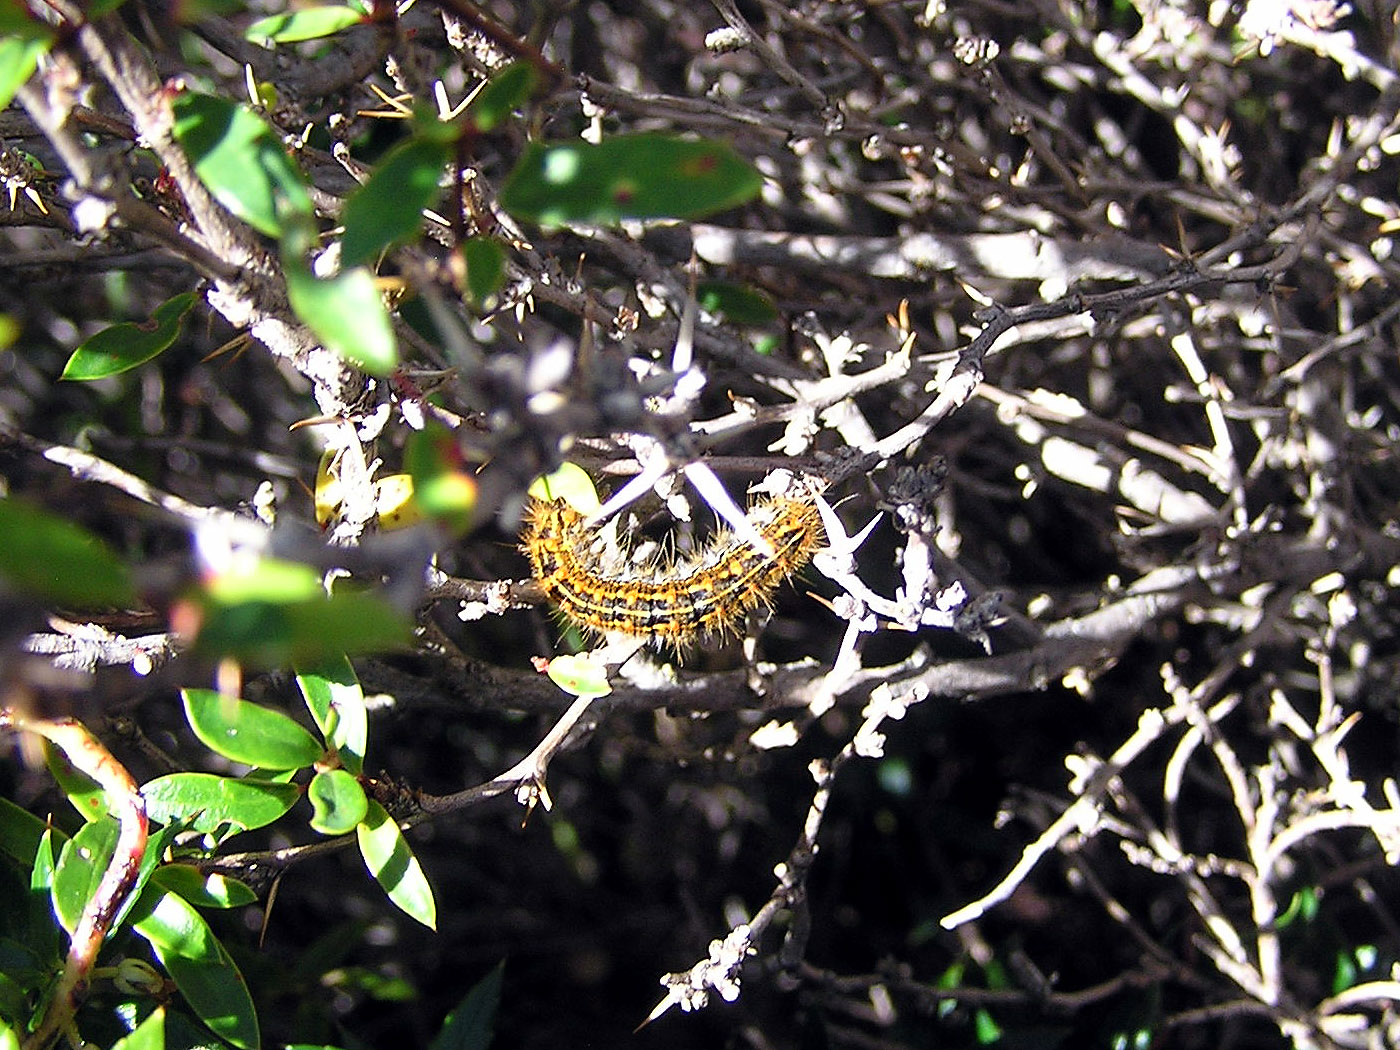 Caterpillar, Torres del Paine National Park, Chile